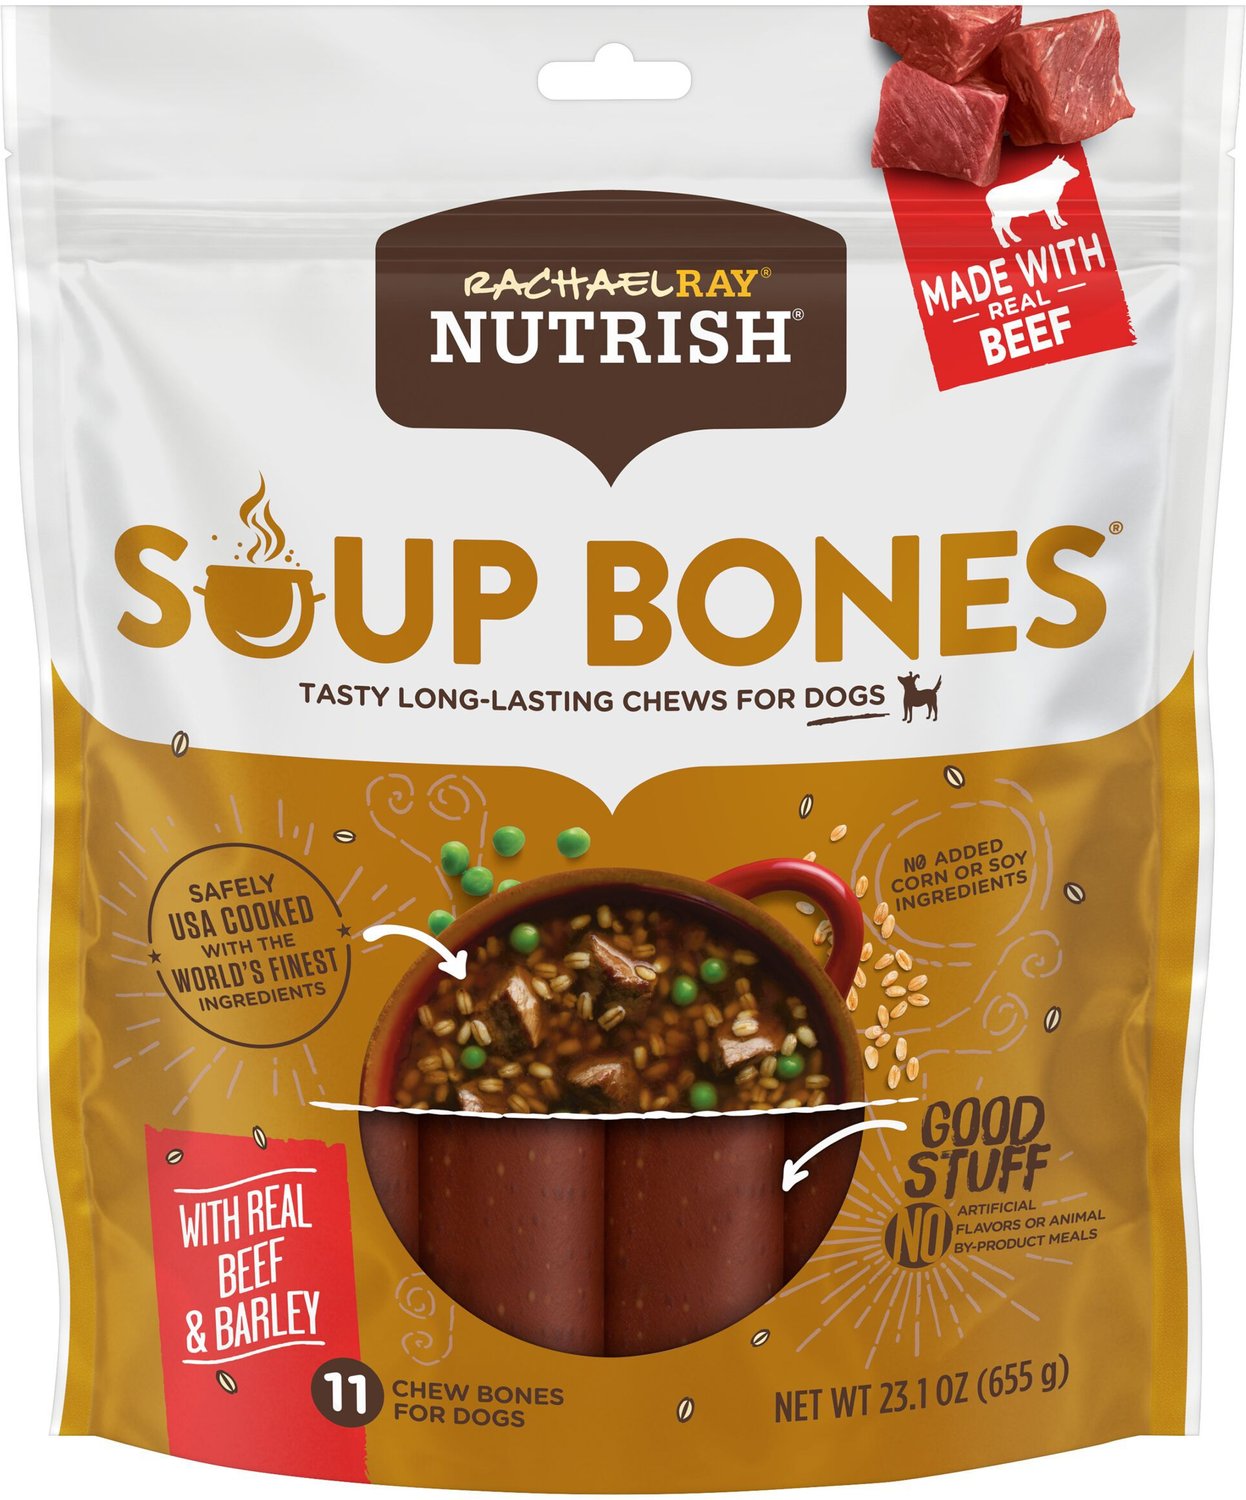 RACHAEL RAY NUTRISH Soup Bones Beef & Barley Flavor Dog Treats, 23.1-oz bag - Chewy.com